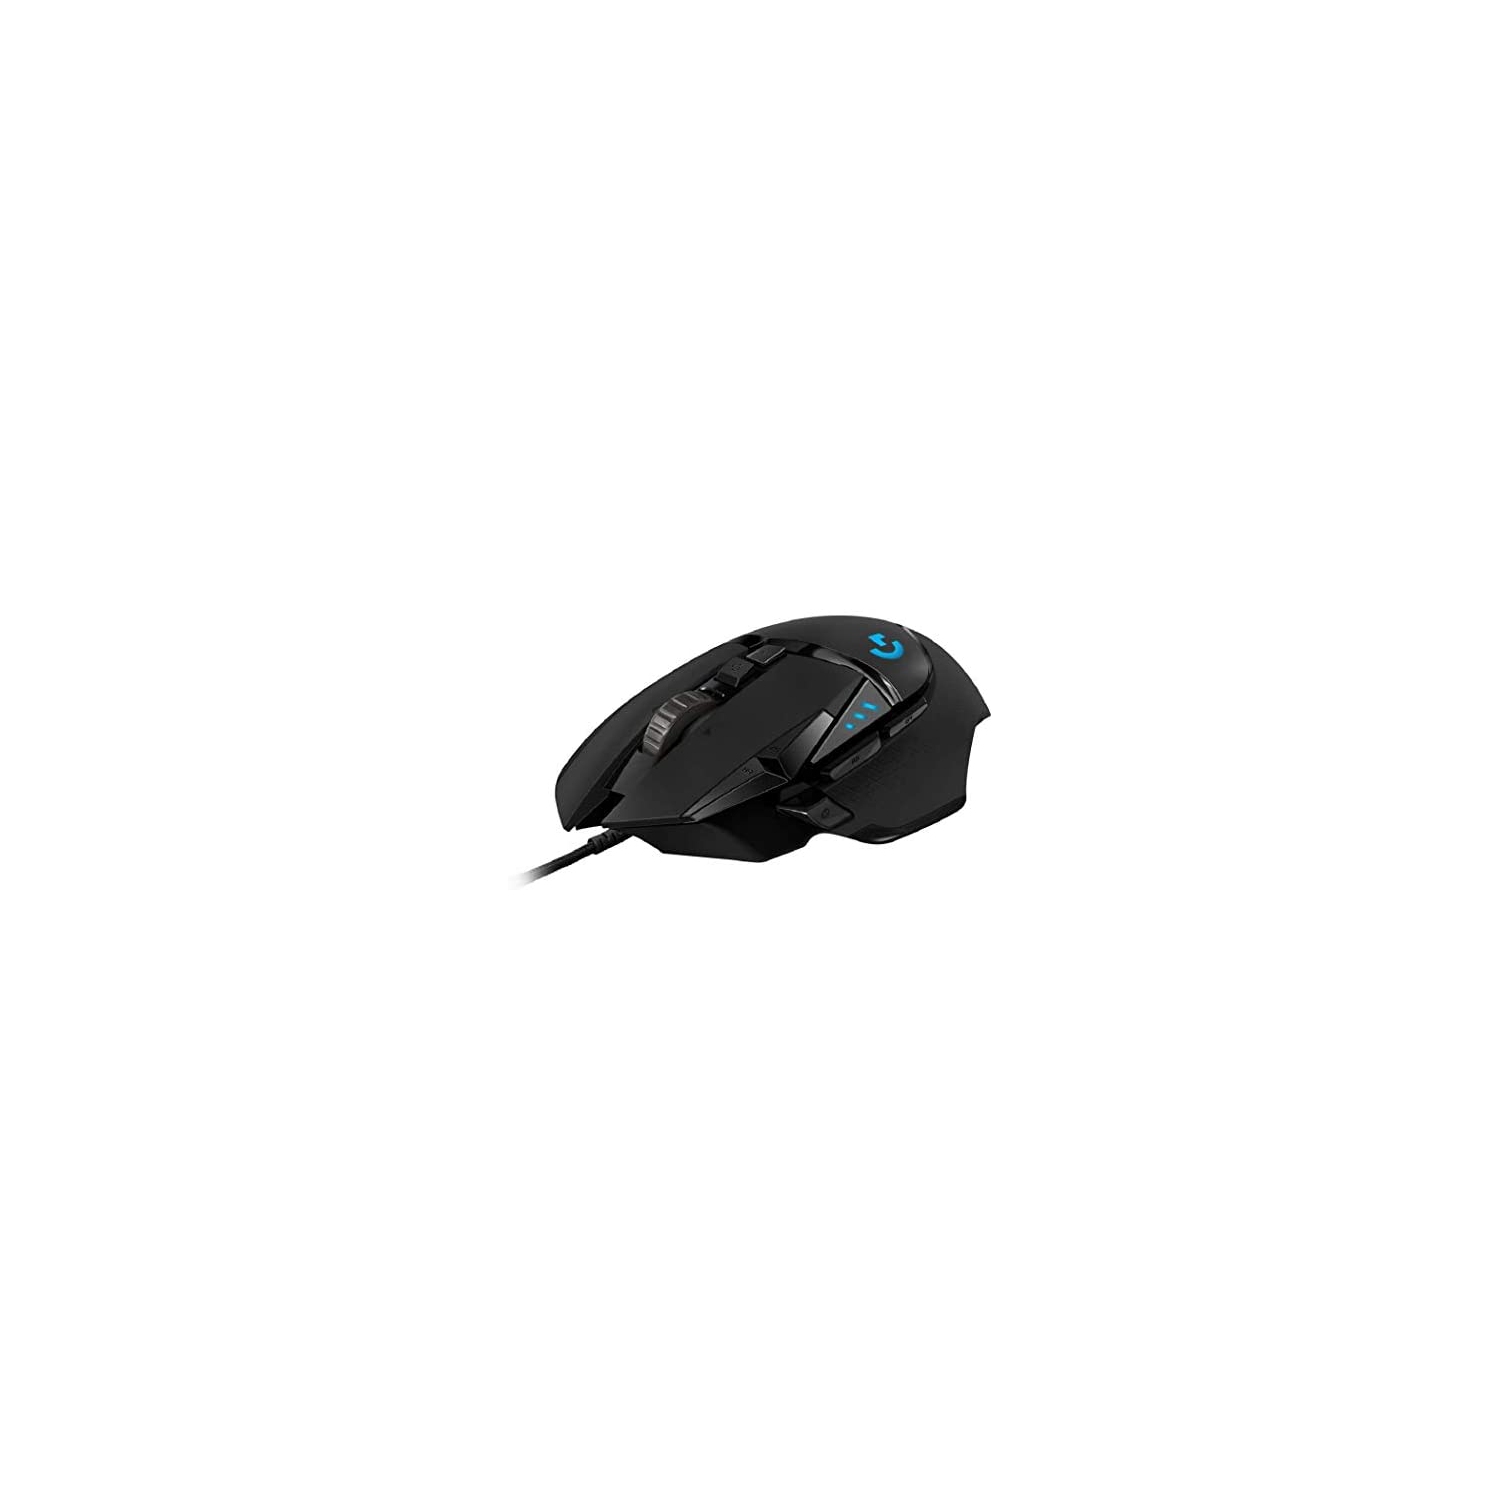 Logitech G502 Hero High Performance Gaming Mouse (910-005469)